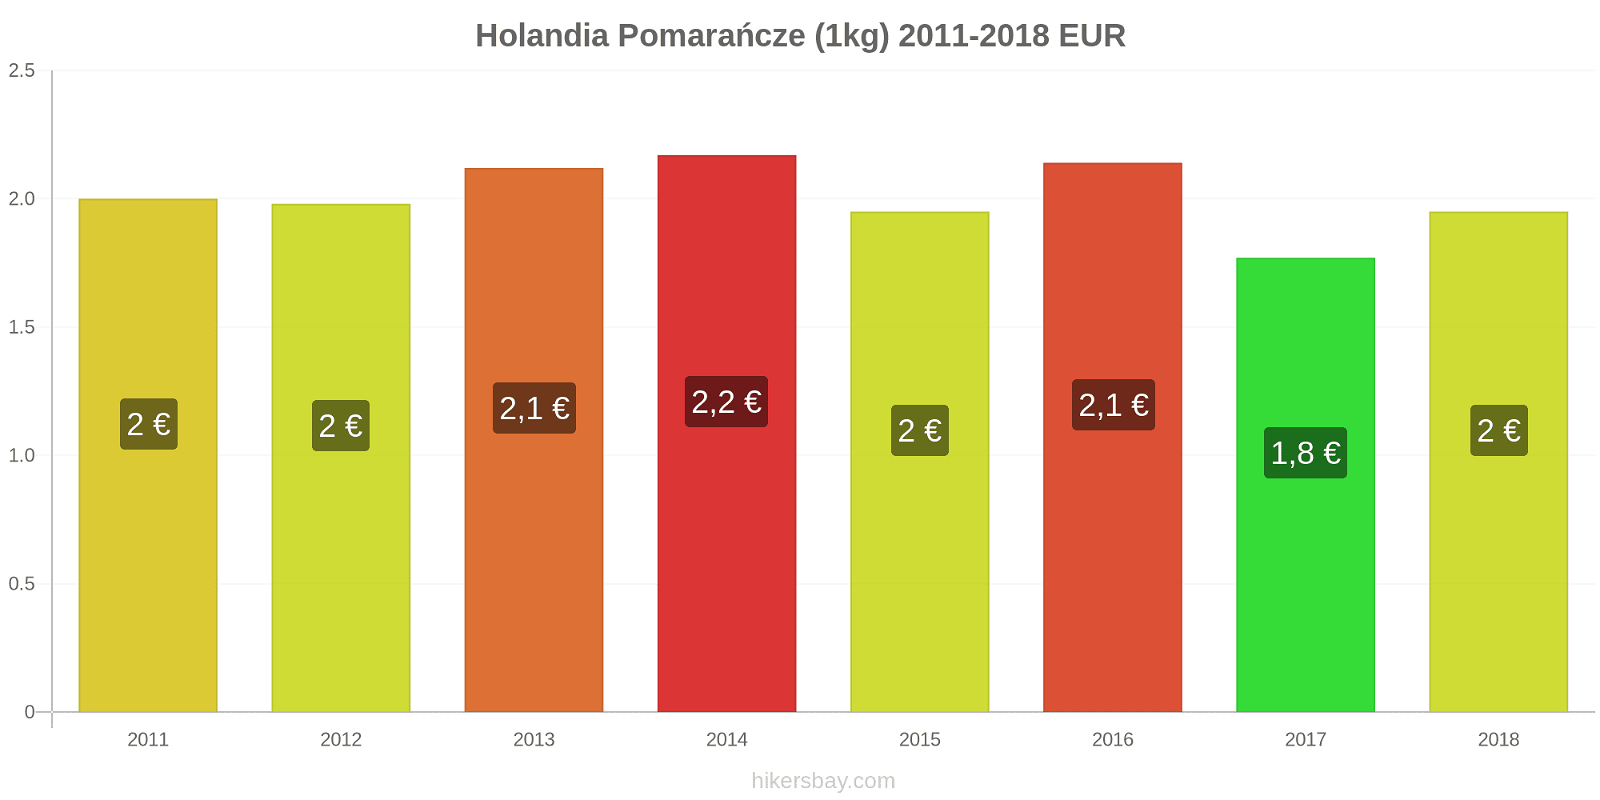 Holandia zmiany cen Pomarańcze (1kg) hikersbay.com